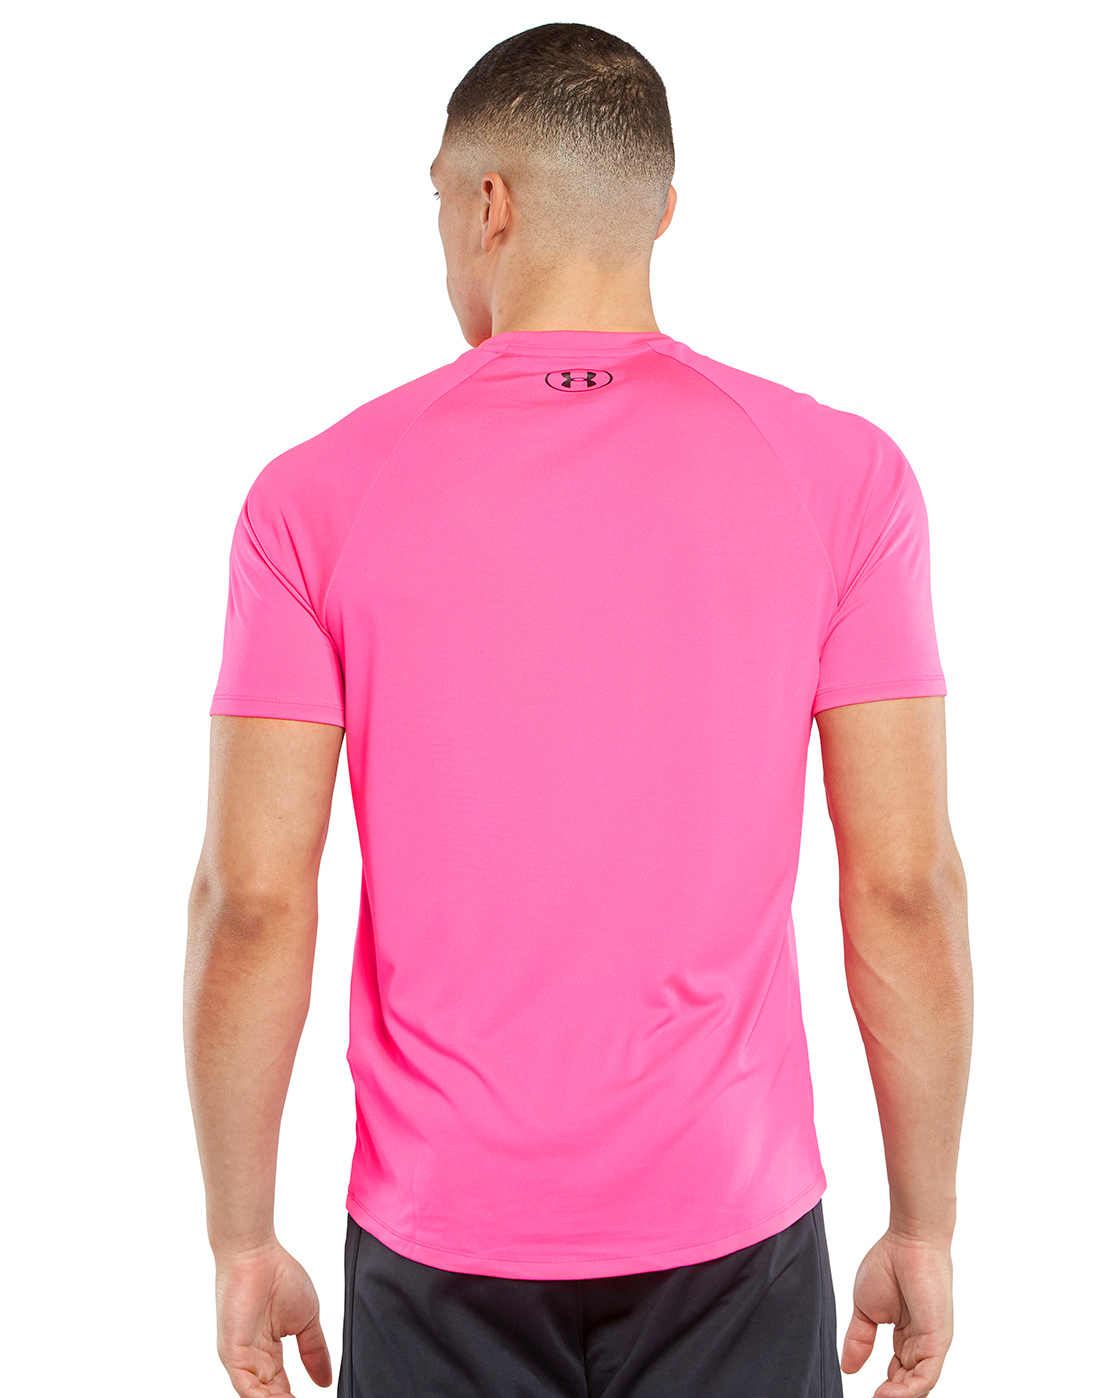 Curso de colisión Calamidad tira Under Armour Mens Tech 2.0 T-shirt - Pink | Life Style Sports UK